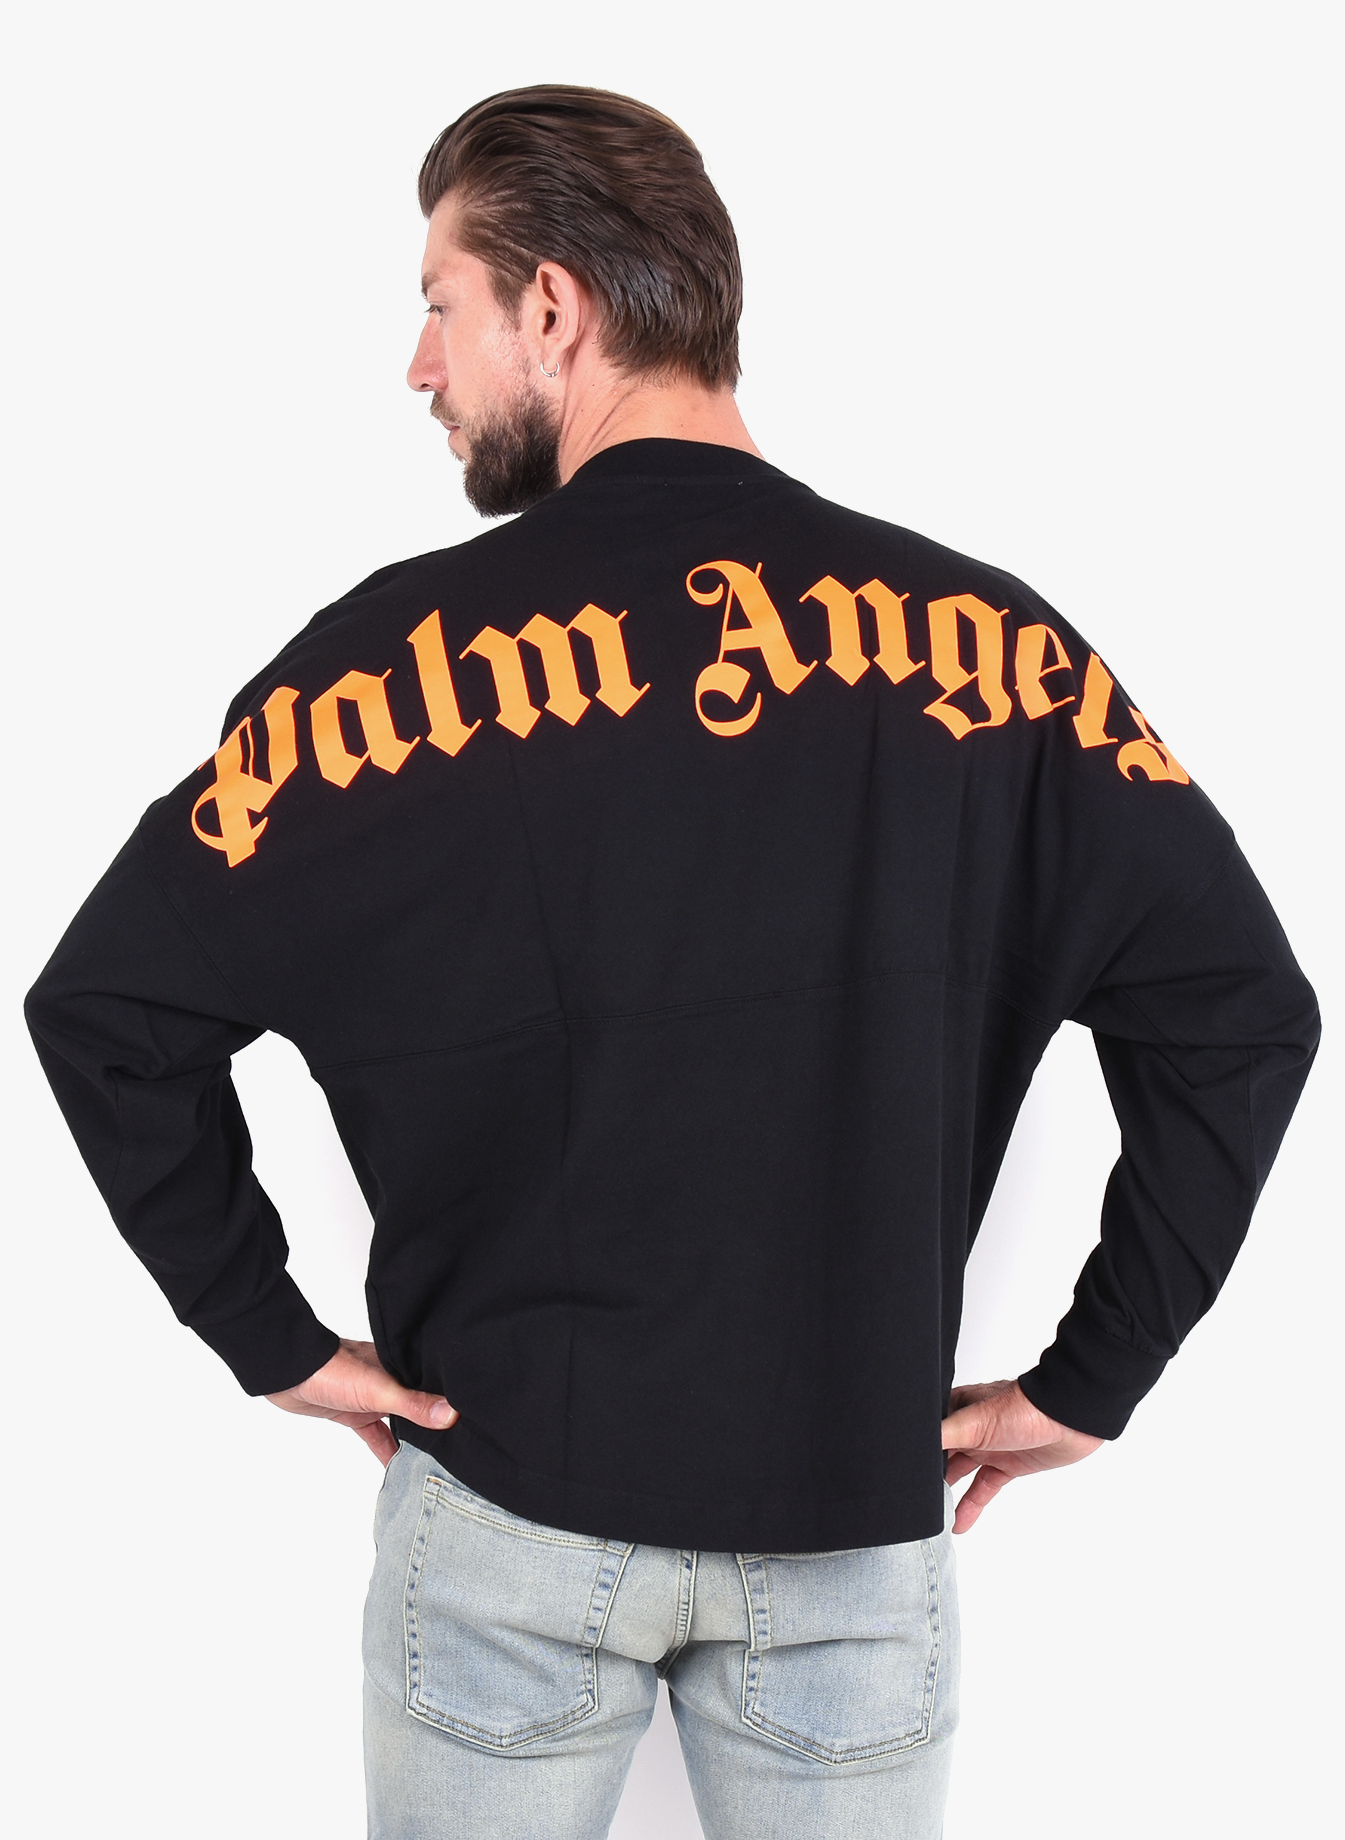 black and orange palm angels shirt